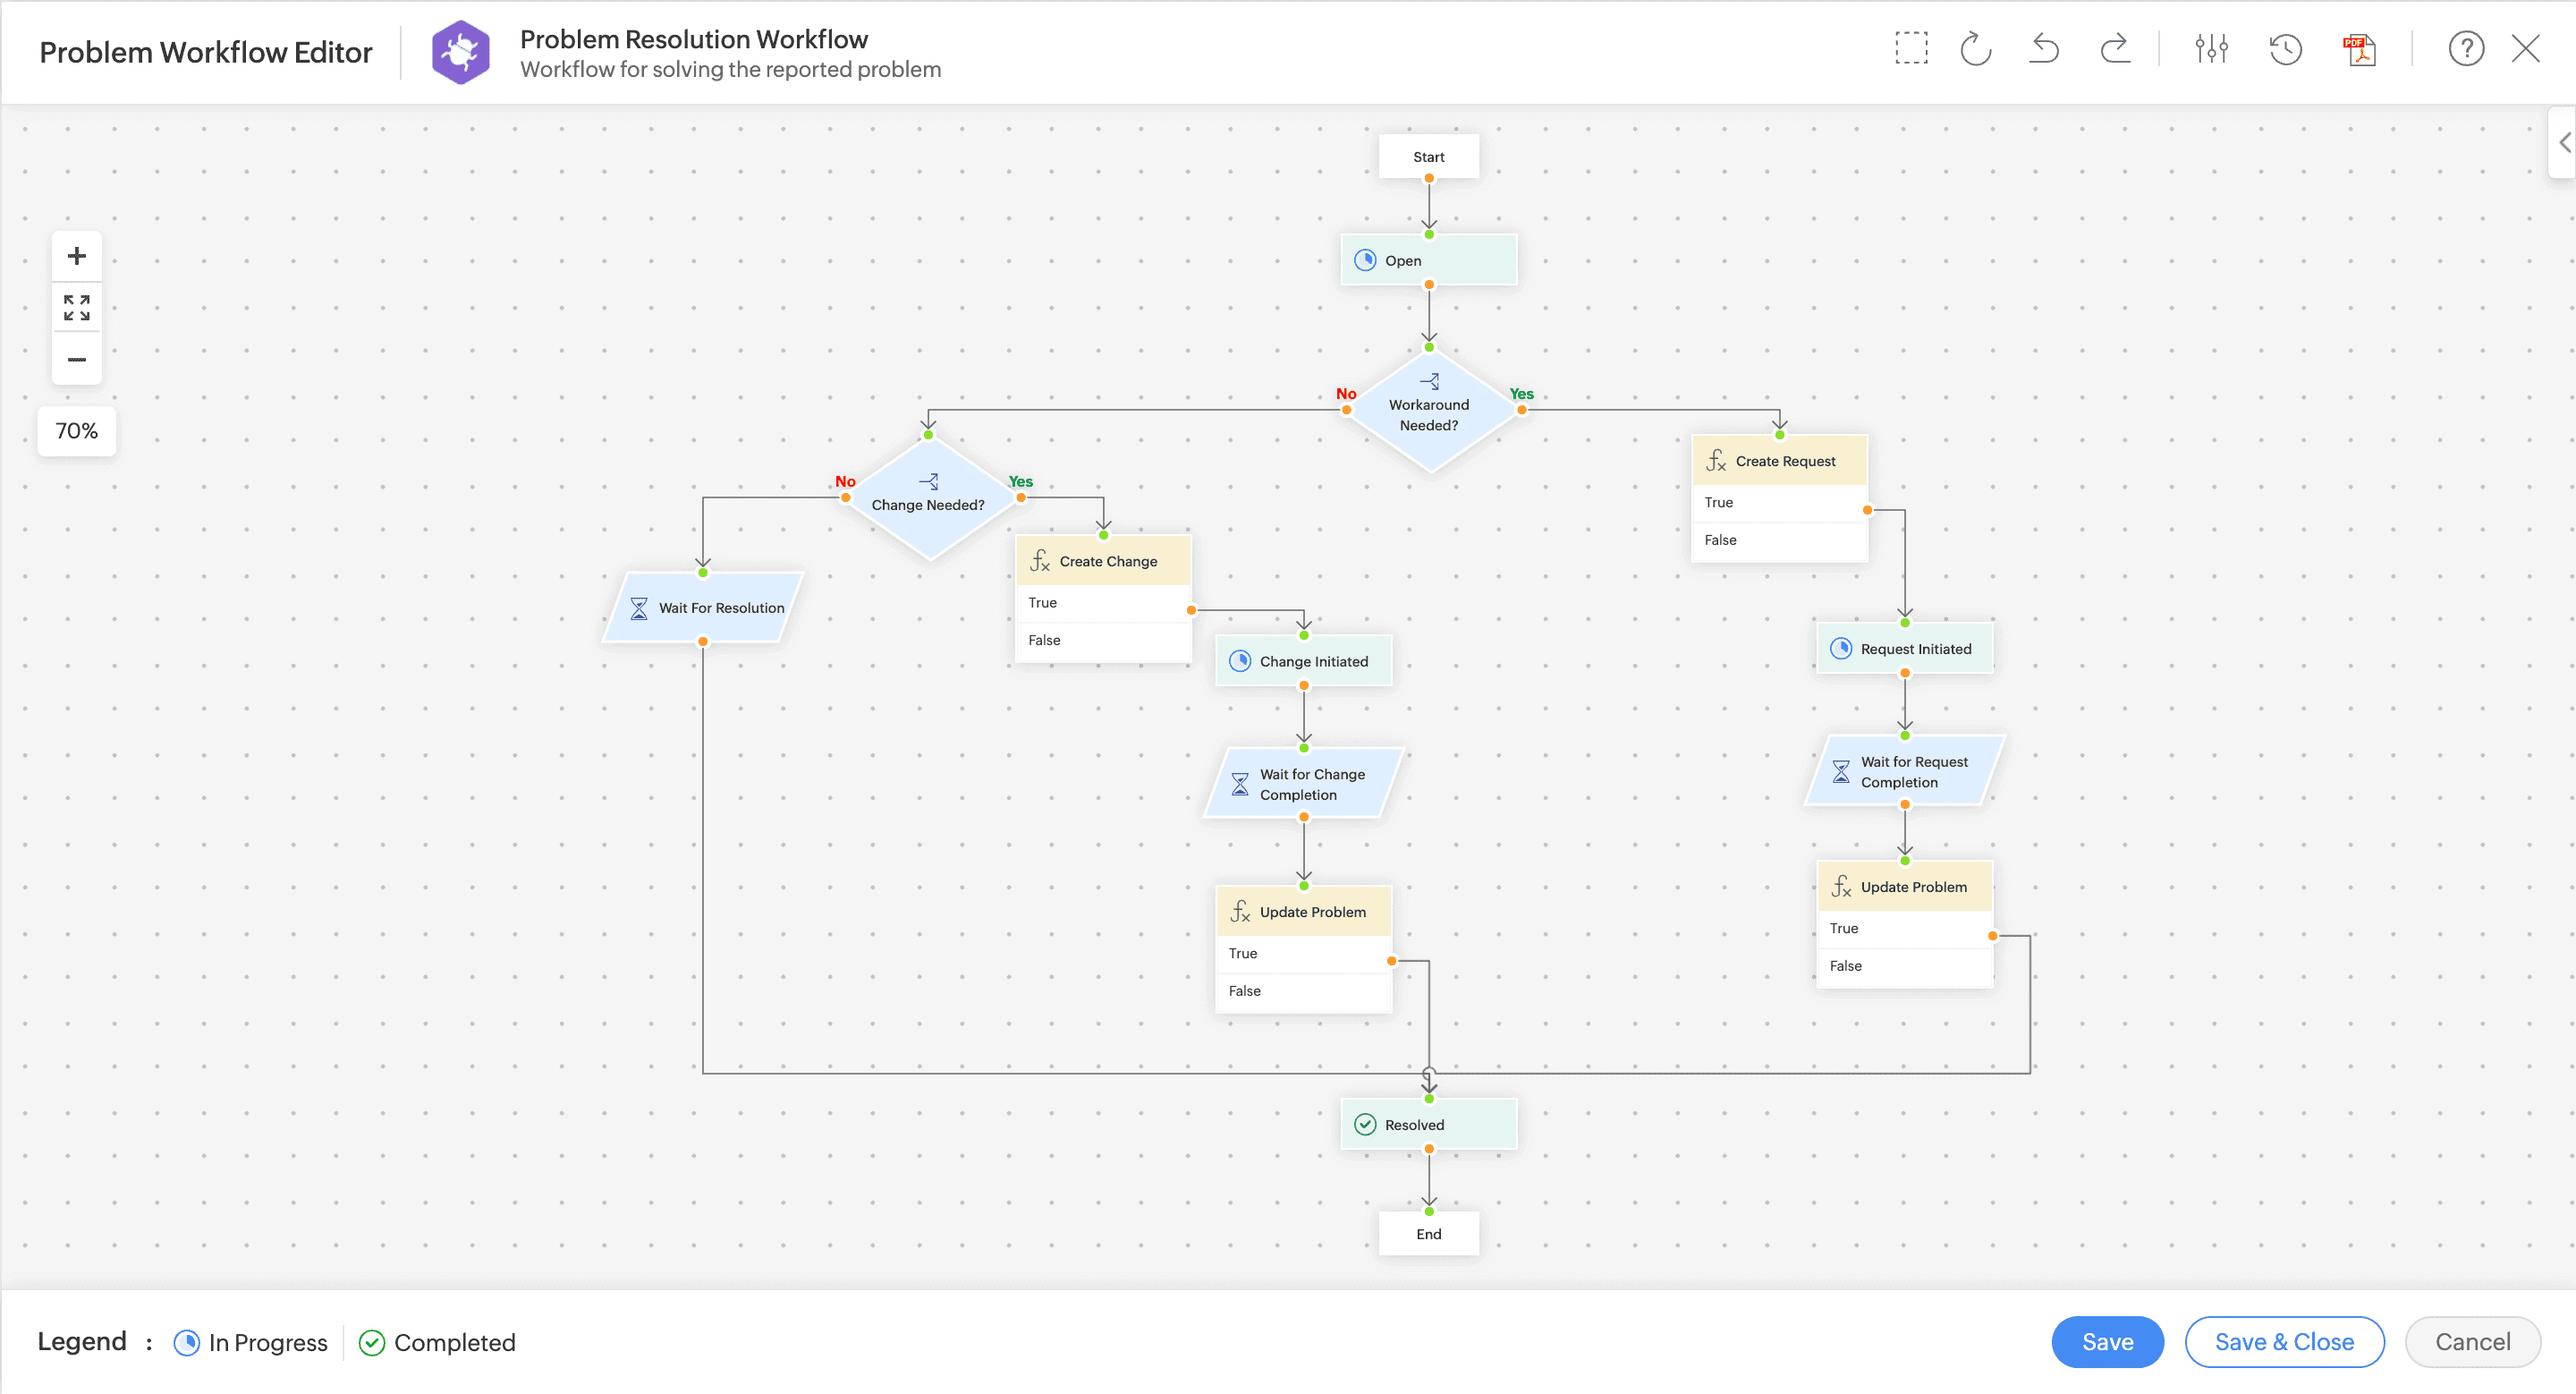 Sample Workflow - Problem